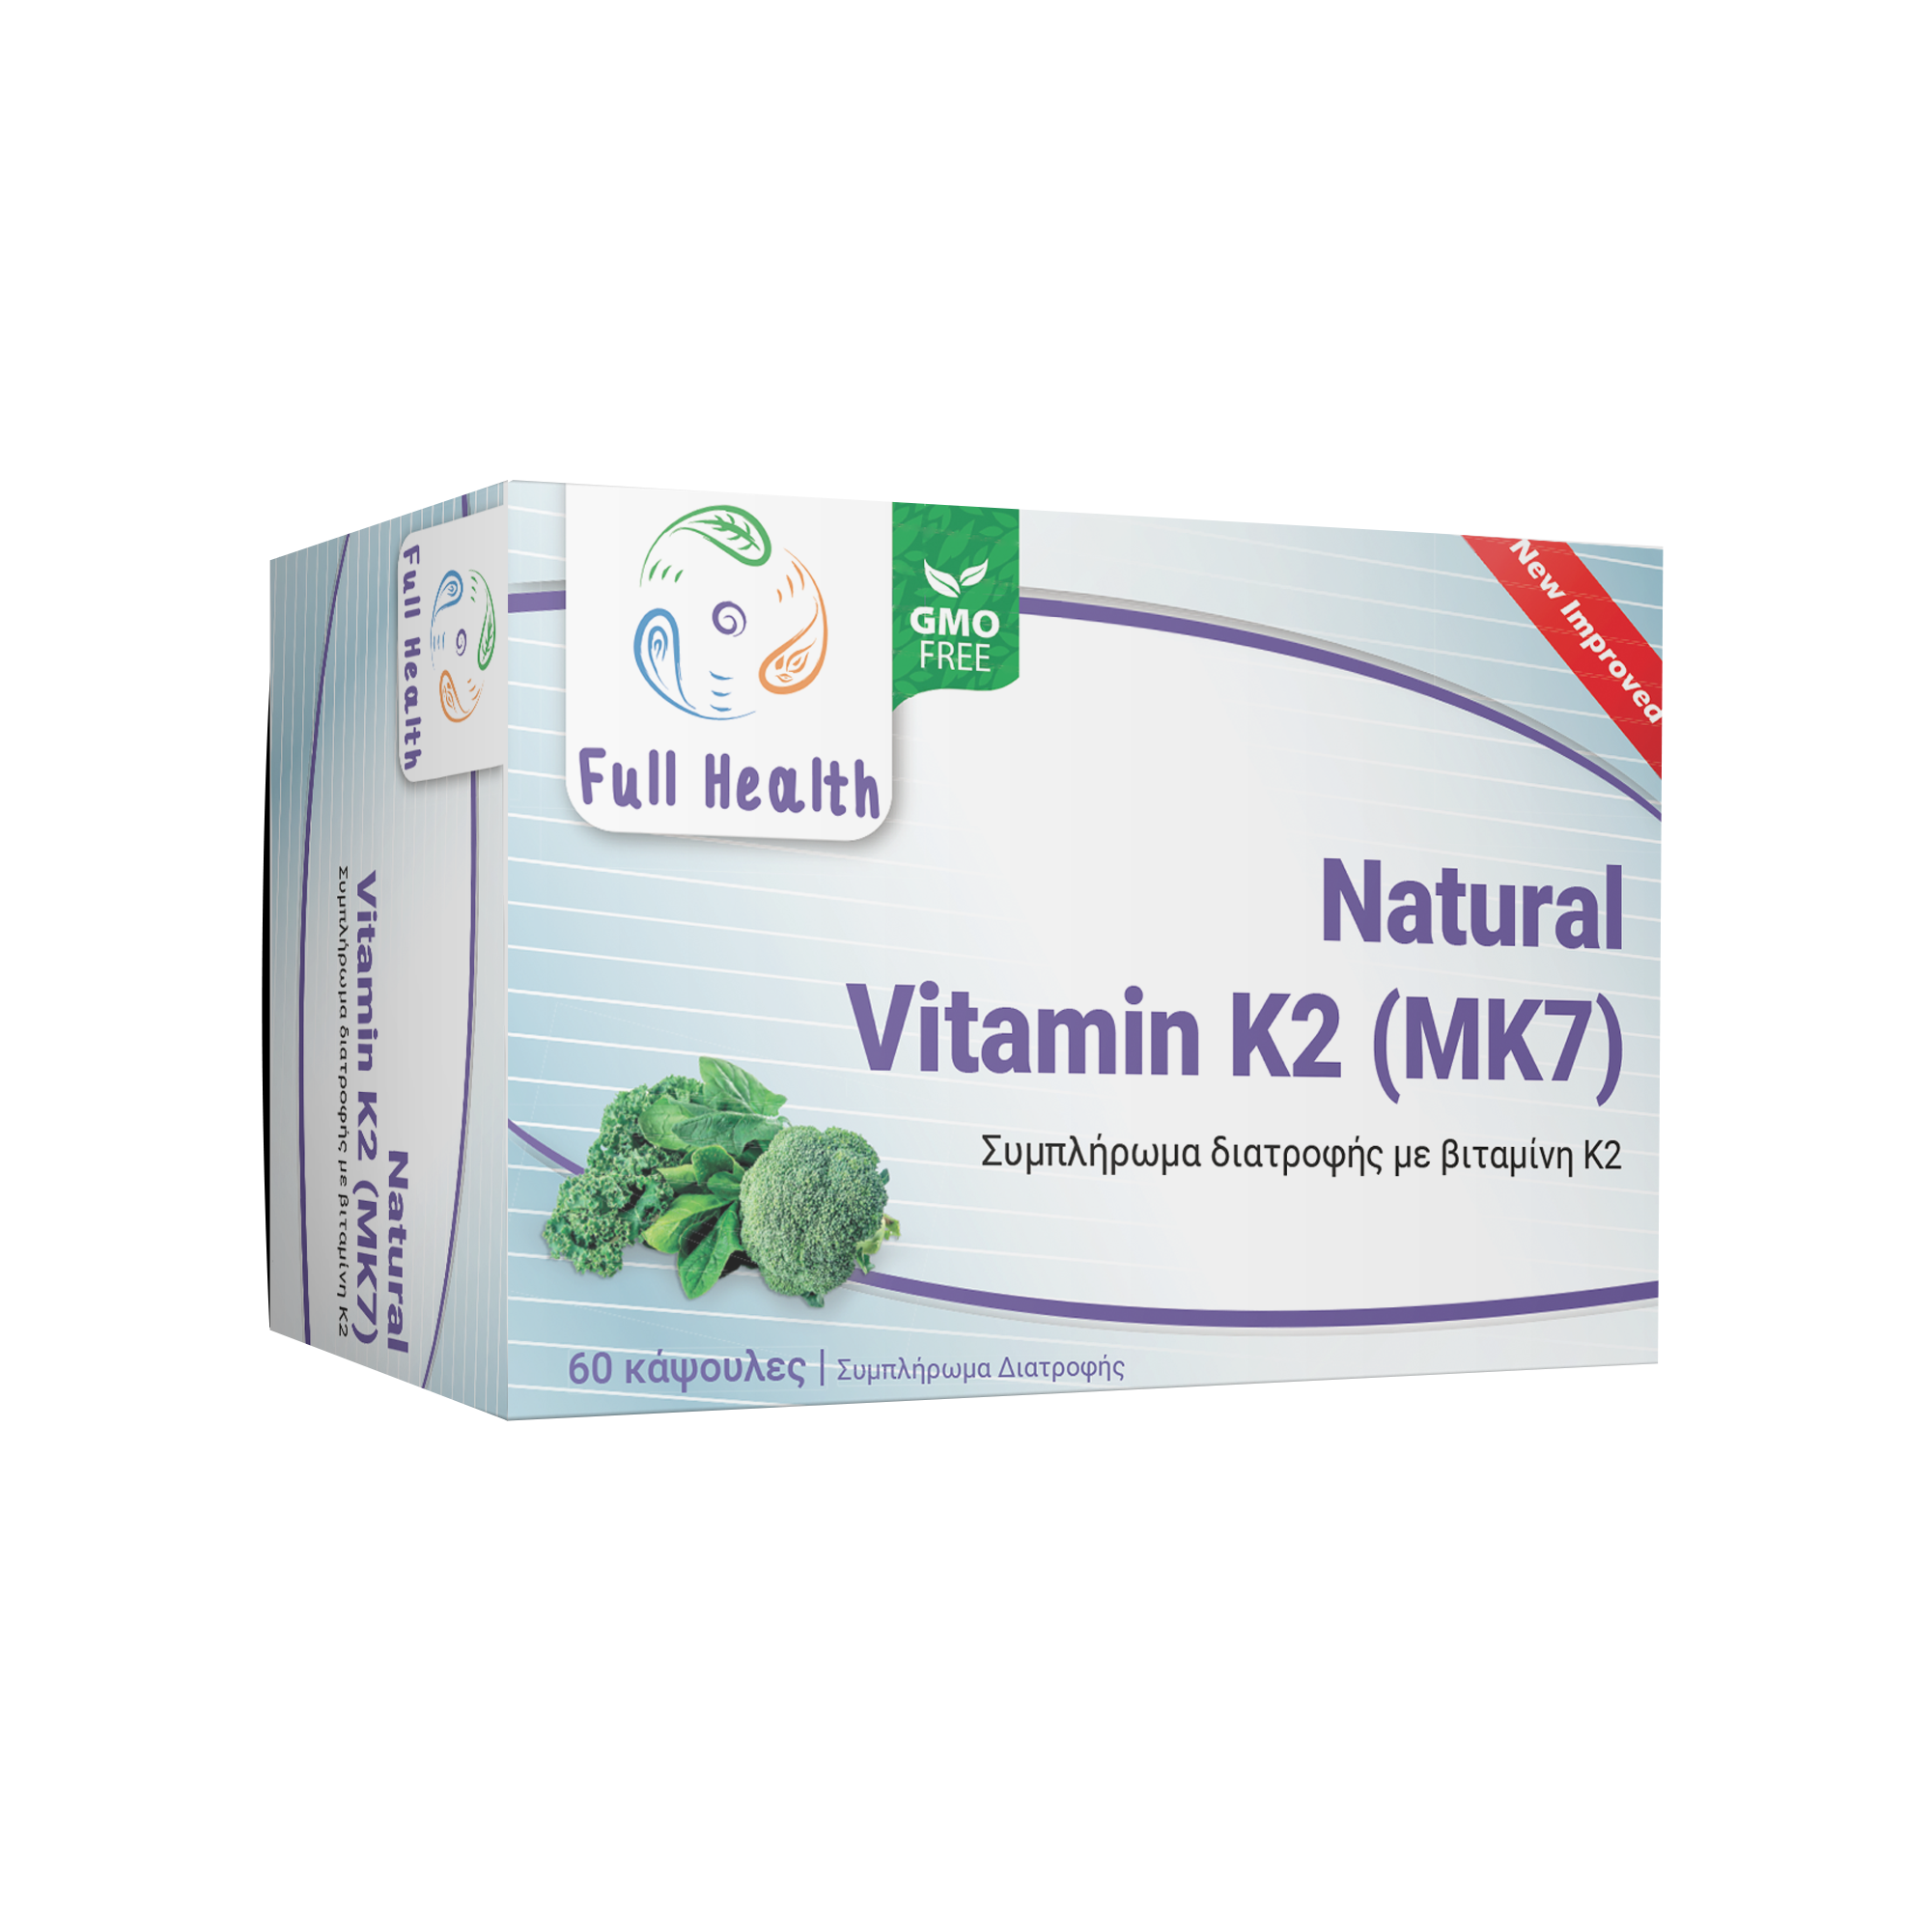 FULL HEALTH NATURAL VITAMIN K2 (MK7) 60 VCaps (Συμπλήρωμα διατροφής με βιταμίνη Κ2 που συμβάλλει στην φυσιολογική κατάσταση των οστών)